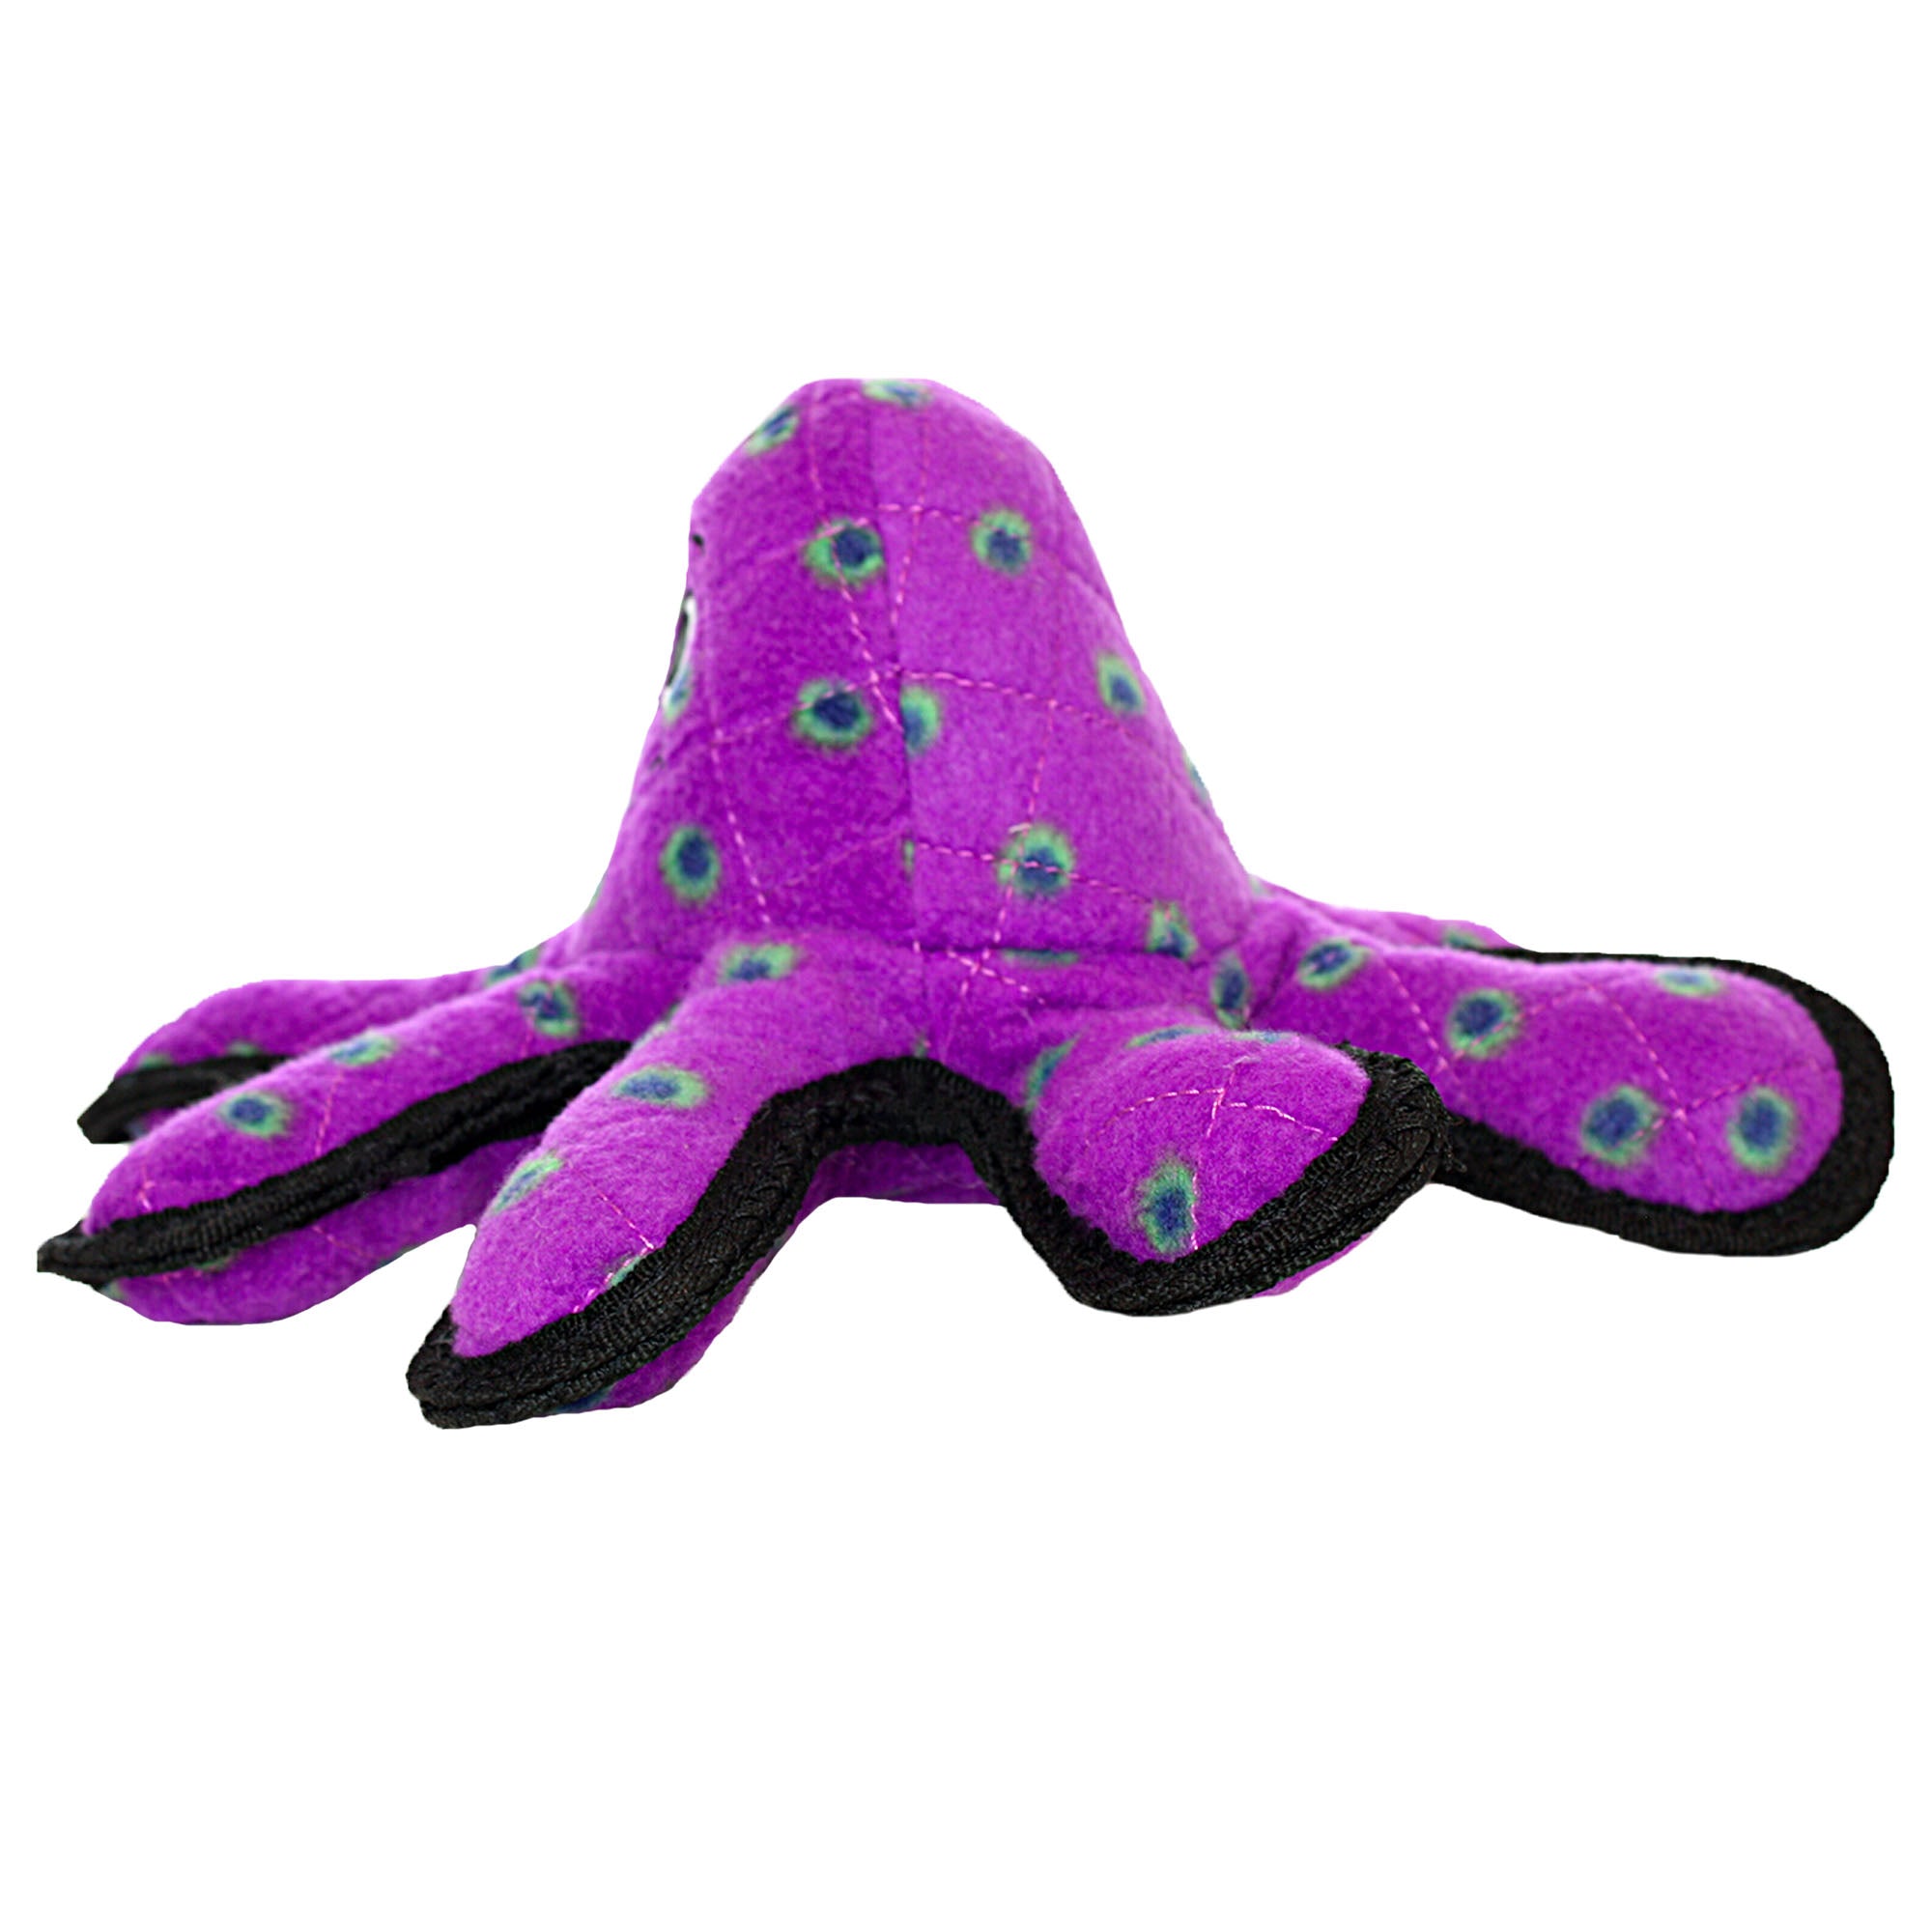 Tuffy Ocean Creature Small Octopus Dog